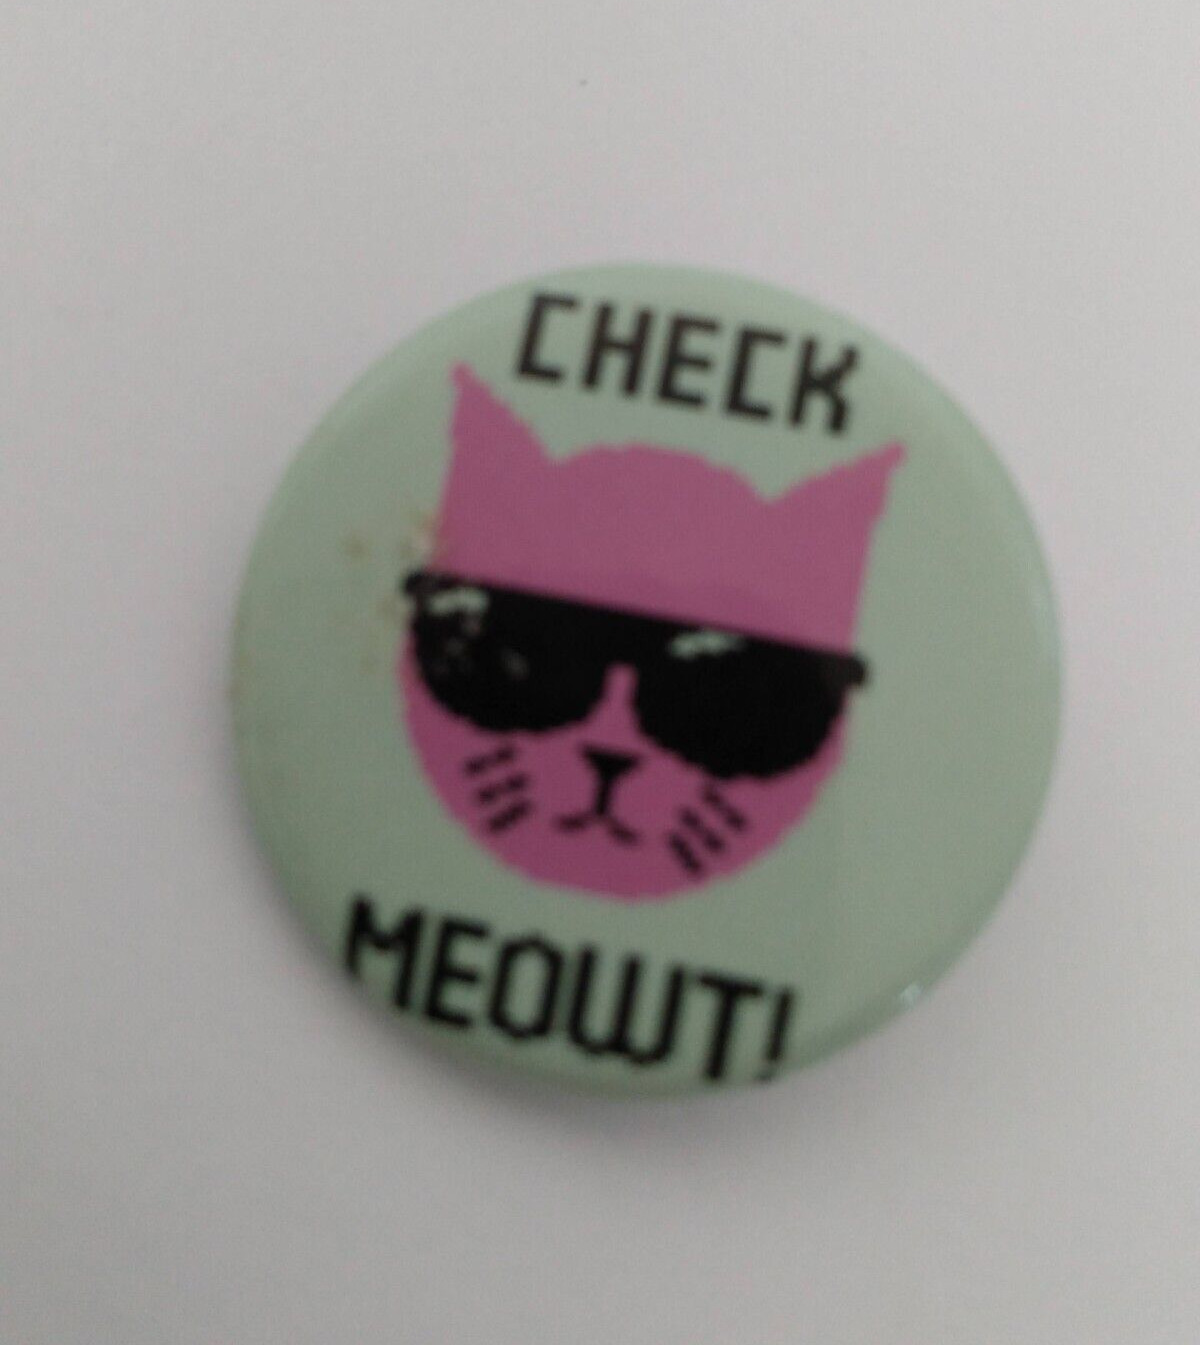 Check Meowt Cat 1.25\